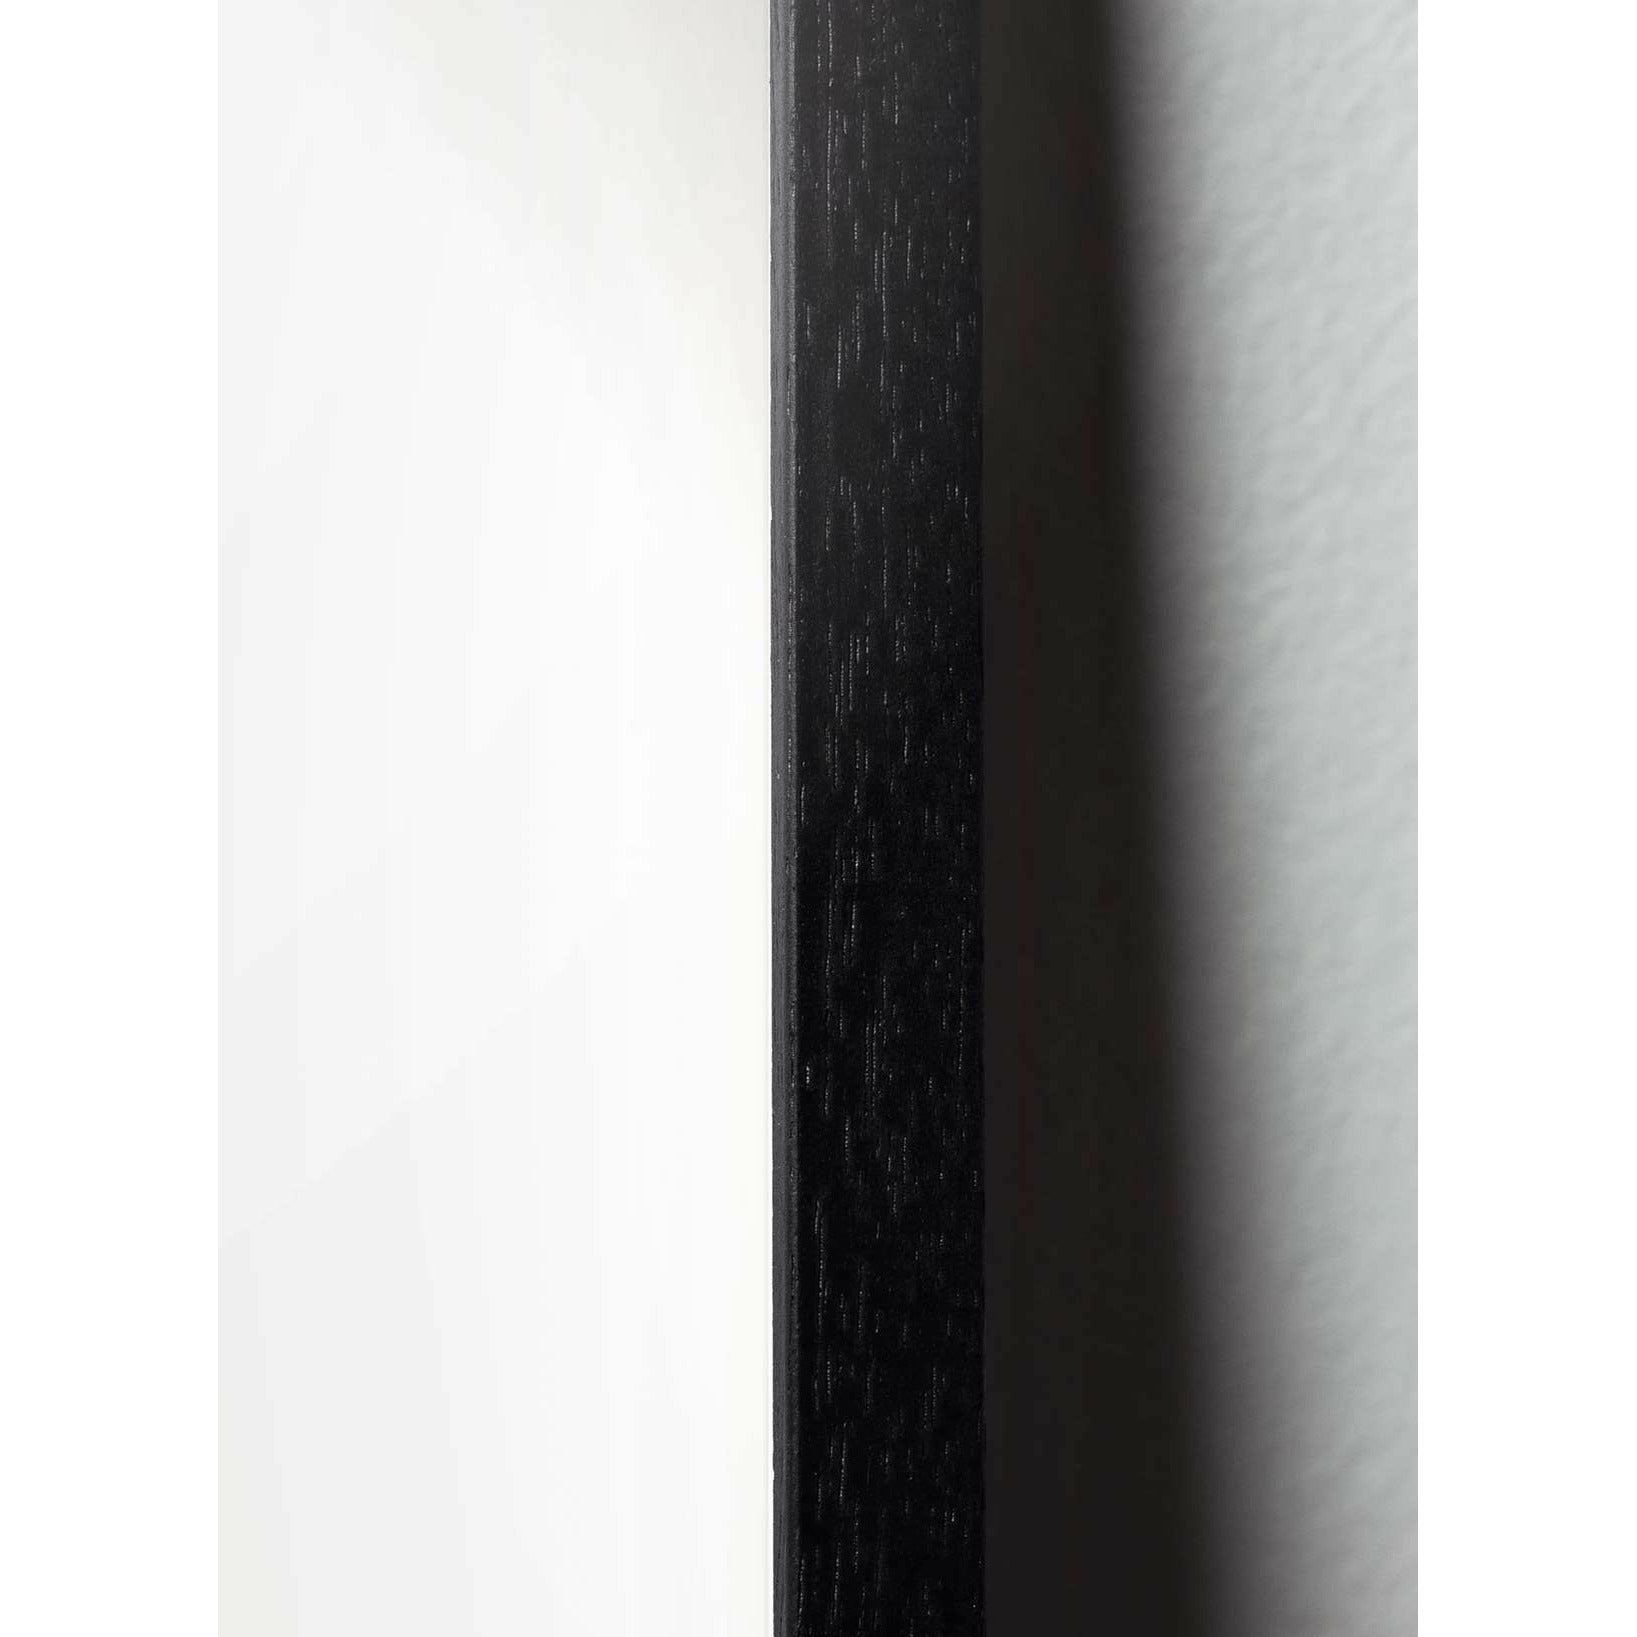 Brainchild Vinter bra klassisk affisch, ram i svart -målat trä 30x40 cm, mörkblå bakgrund